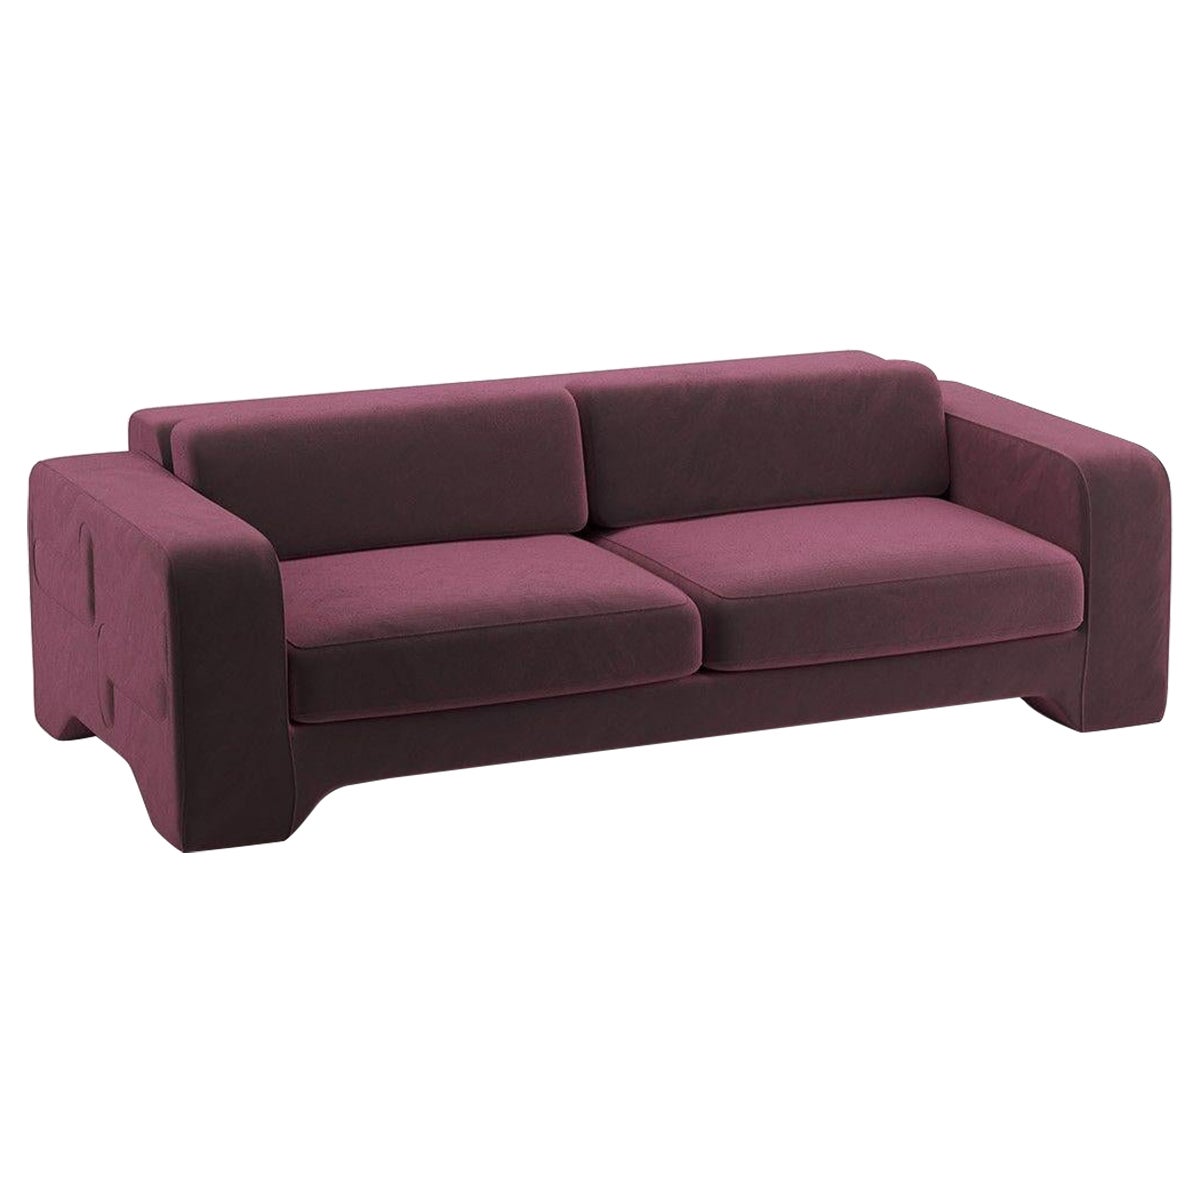 Popus Editions Giovanna 3 Seater Sofa in Bordeaux Burgundy Como Velvet Fabric For Sale